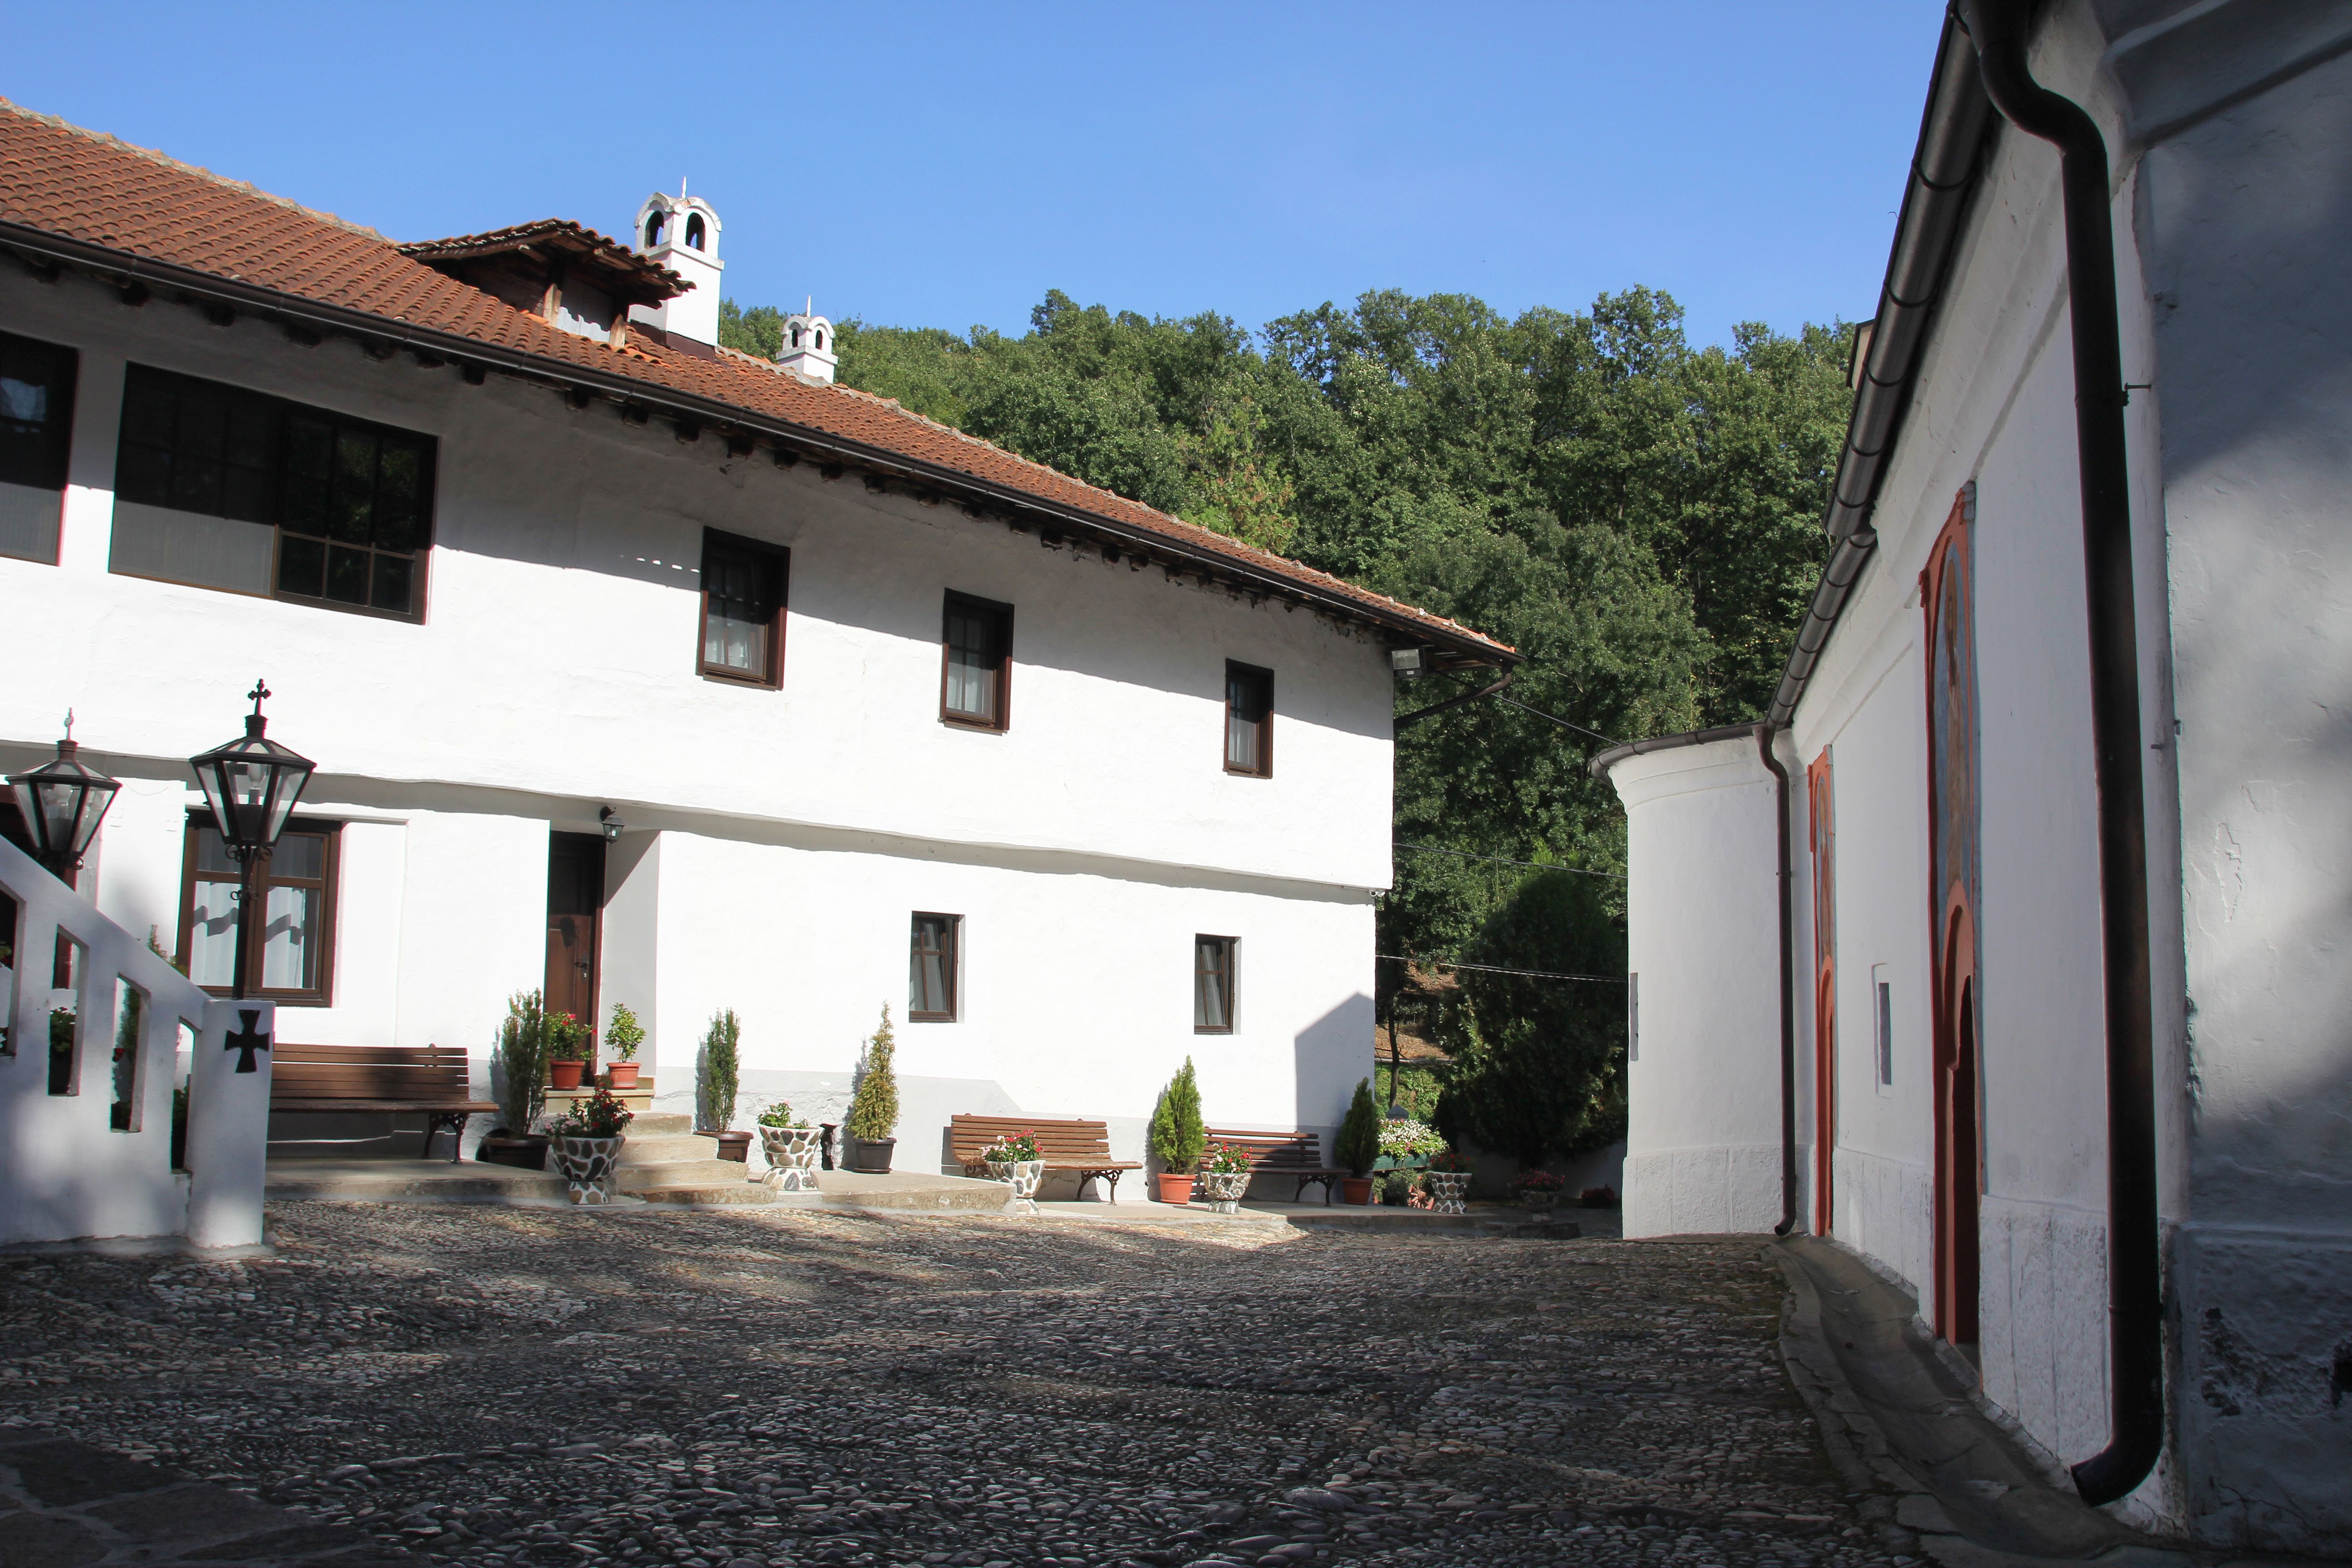 Monastery of St. Roman